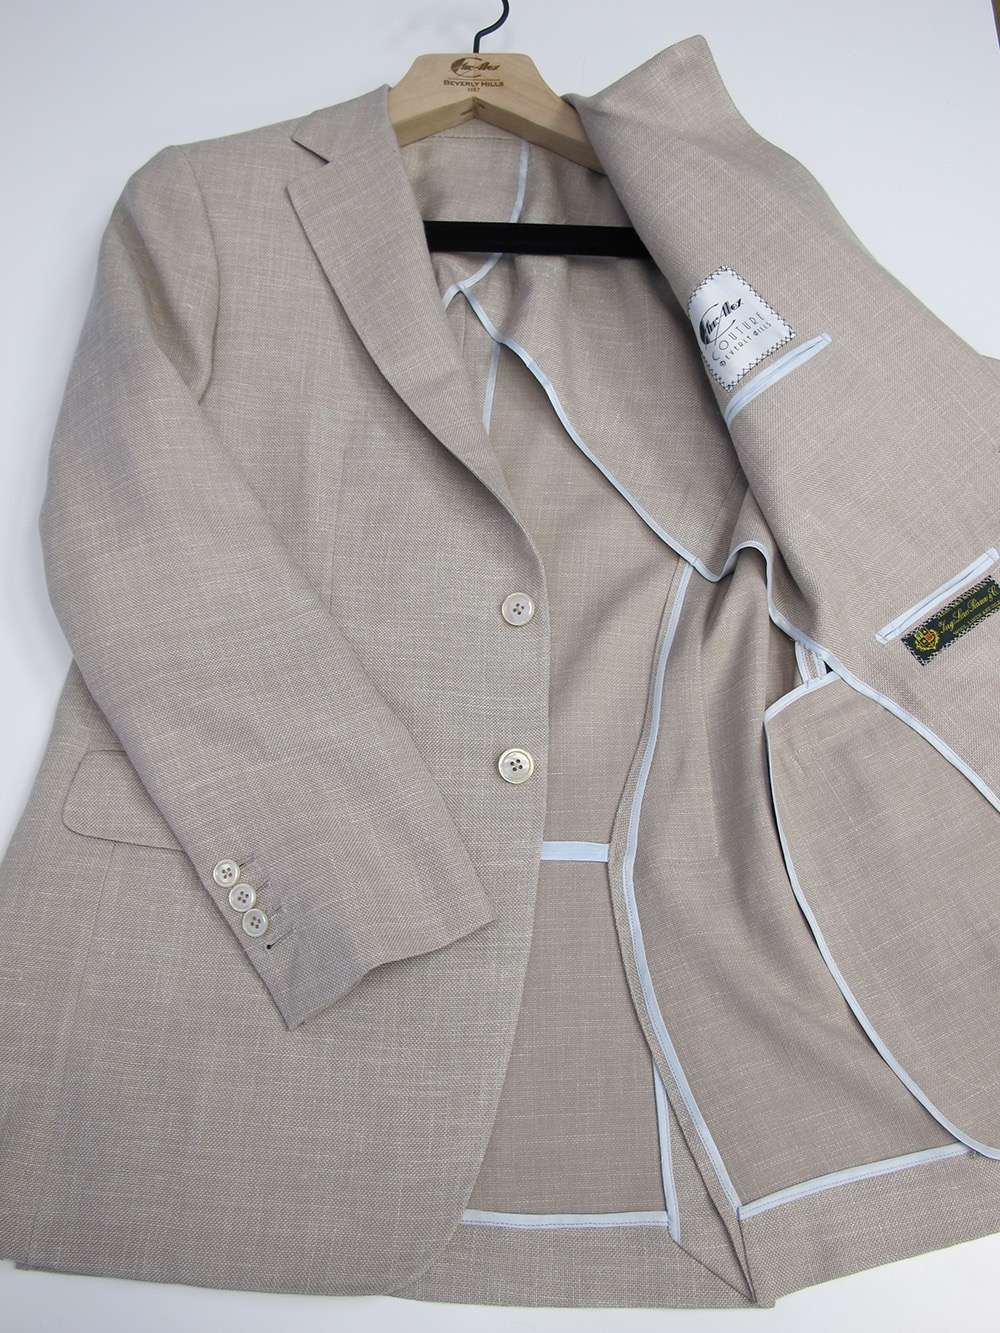 Mr. Alex Custom Shirts & Suits - Beverly Hills | 9855 N Santa Monica Blvd, Beverly Hills, CA 90212 | Phone: (310) 556-5657